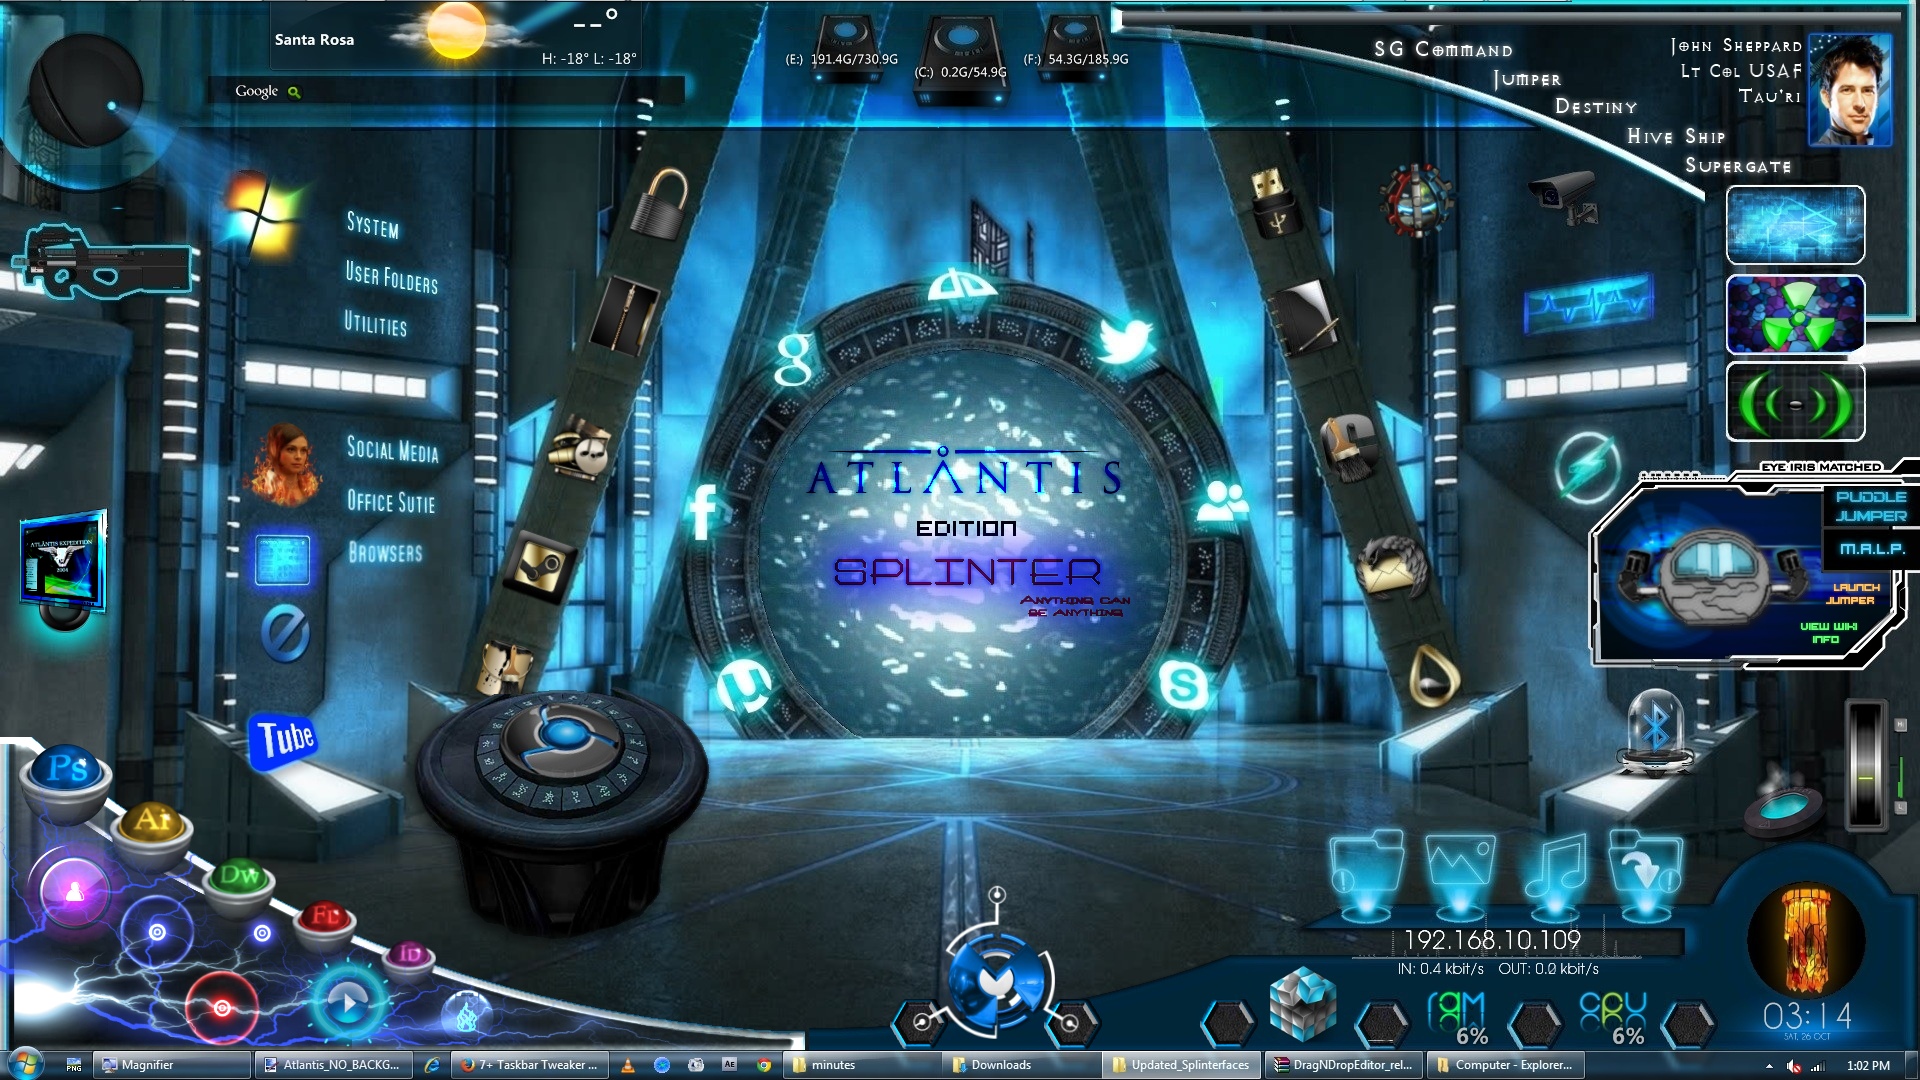 Atlantis Edition Splinter - Stargate Screensaver Windows 10 - HD Wallpaper 